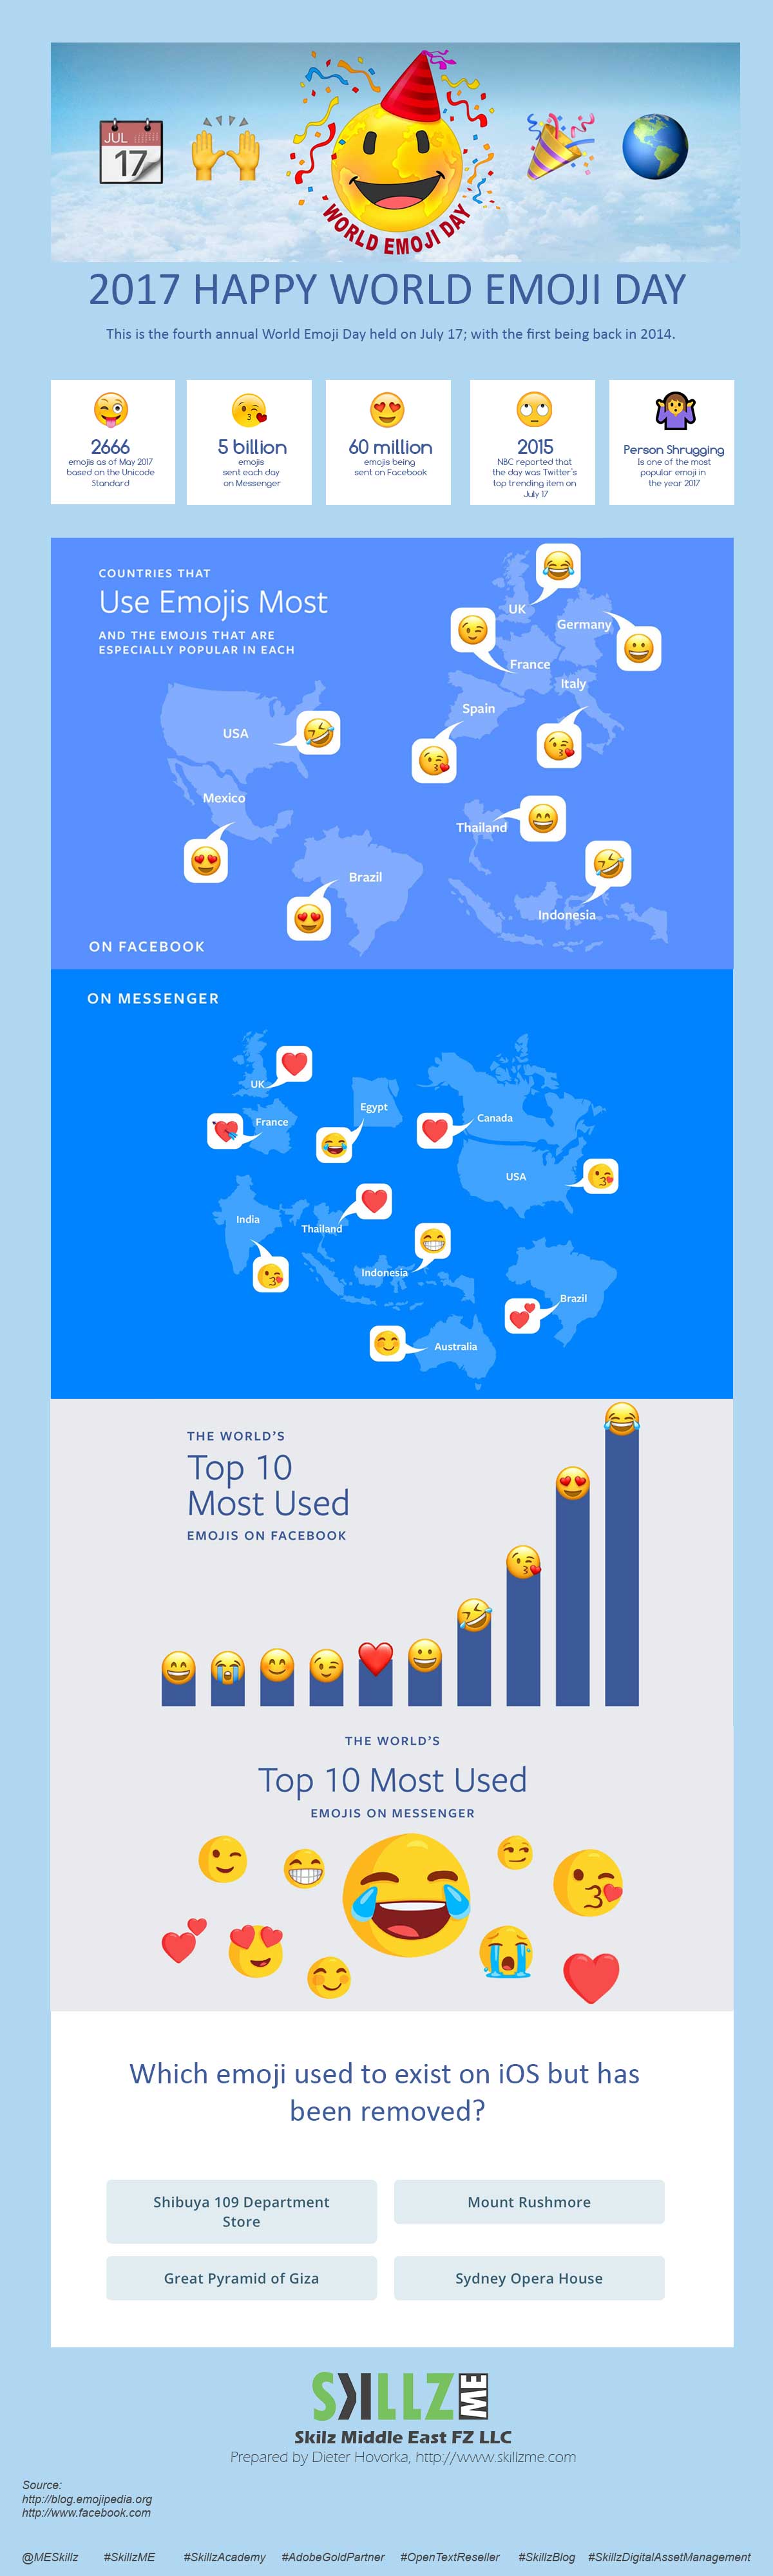 Infographic 2017 Happy World Emoji Day